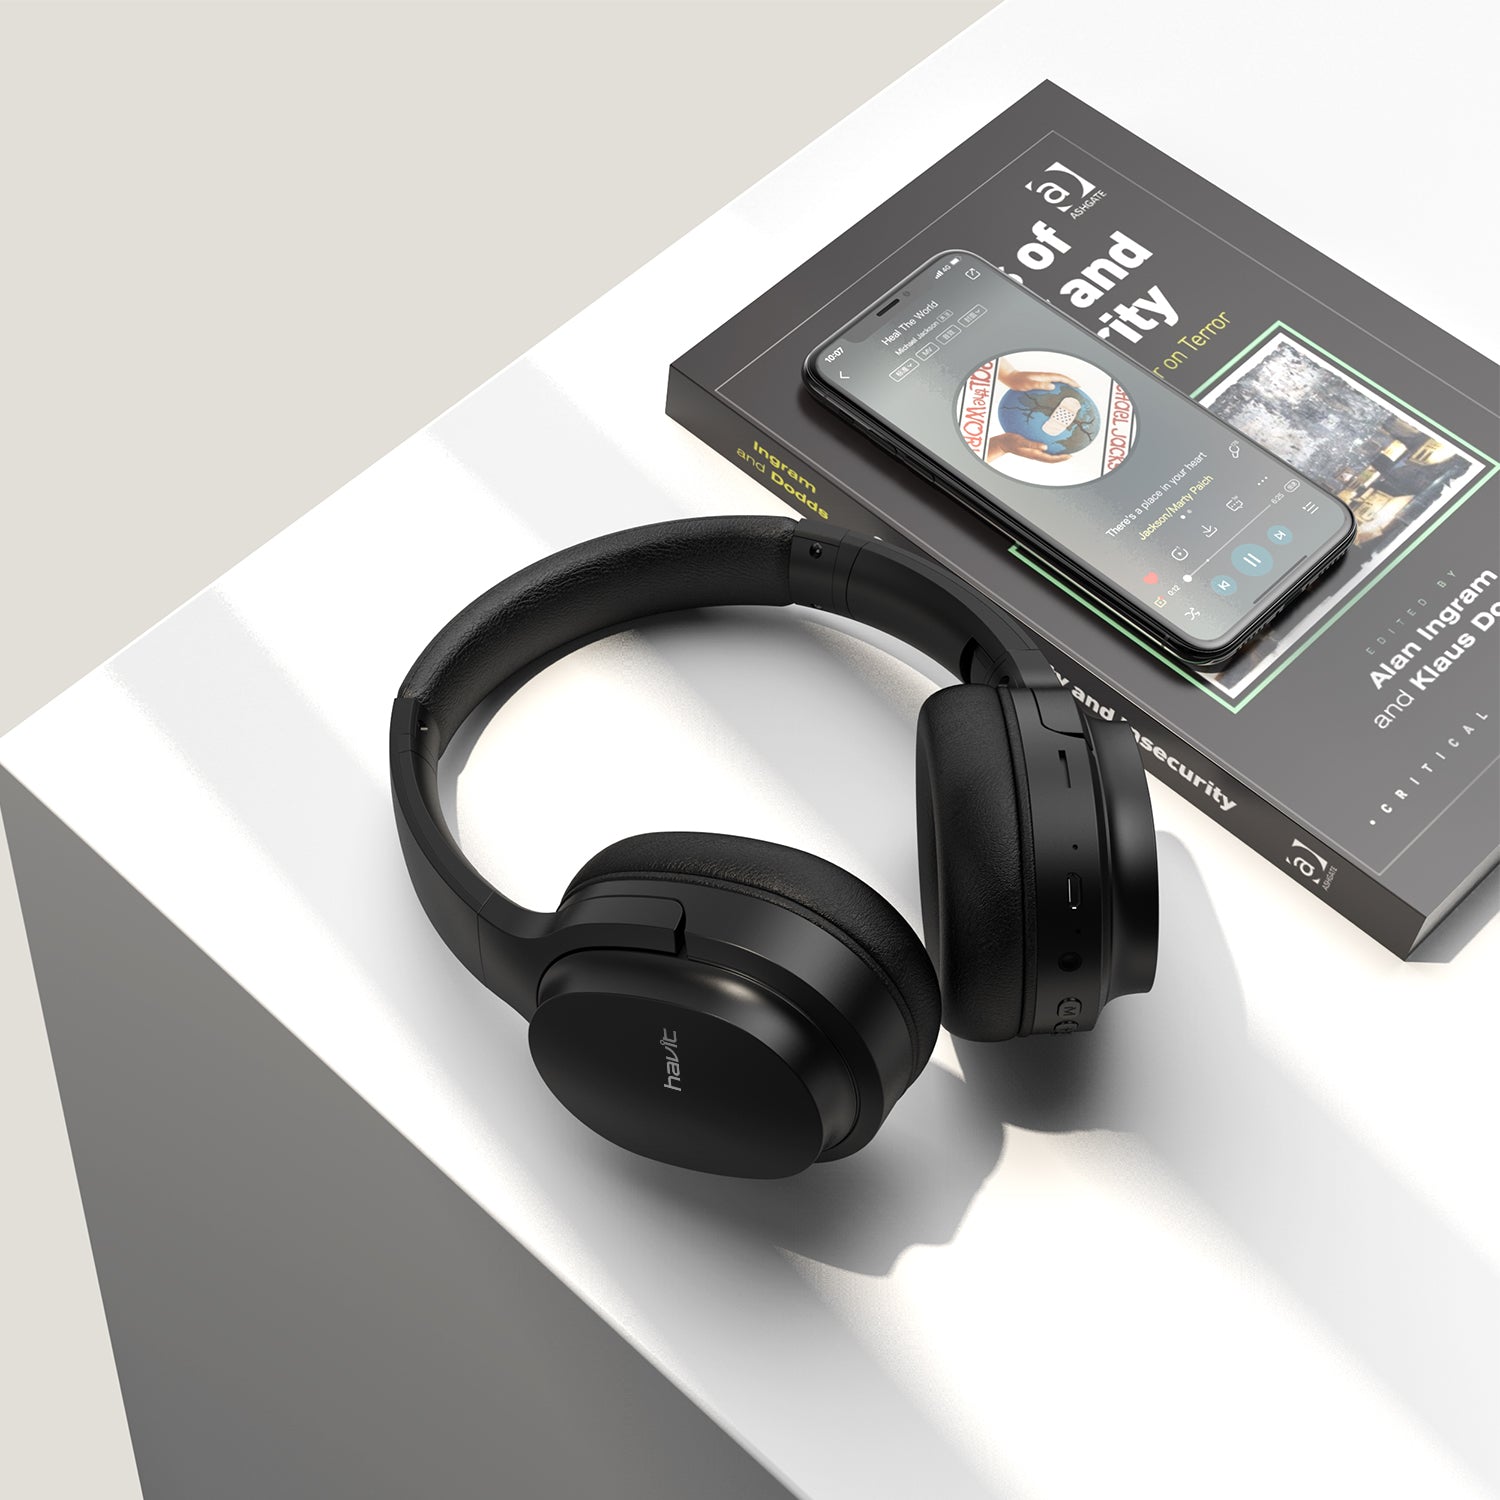 HAVIT I62N Active Noise Cancelling Wireless Bluetooth Headset, Fold Swiveling Earcups & Adjustable Headband